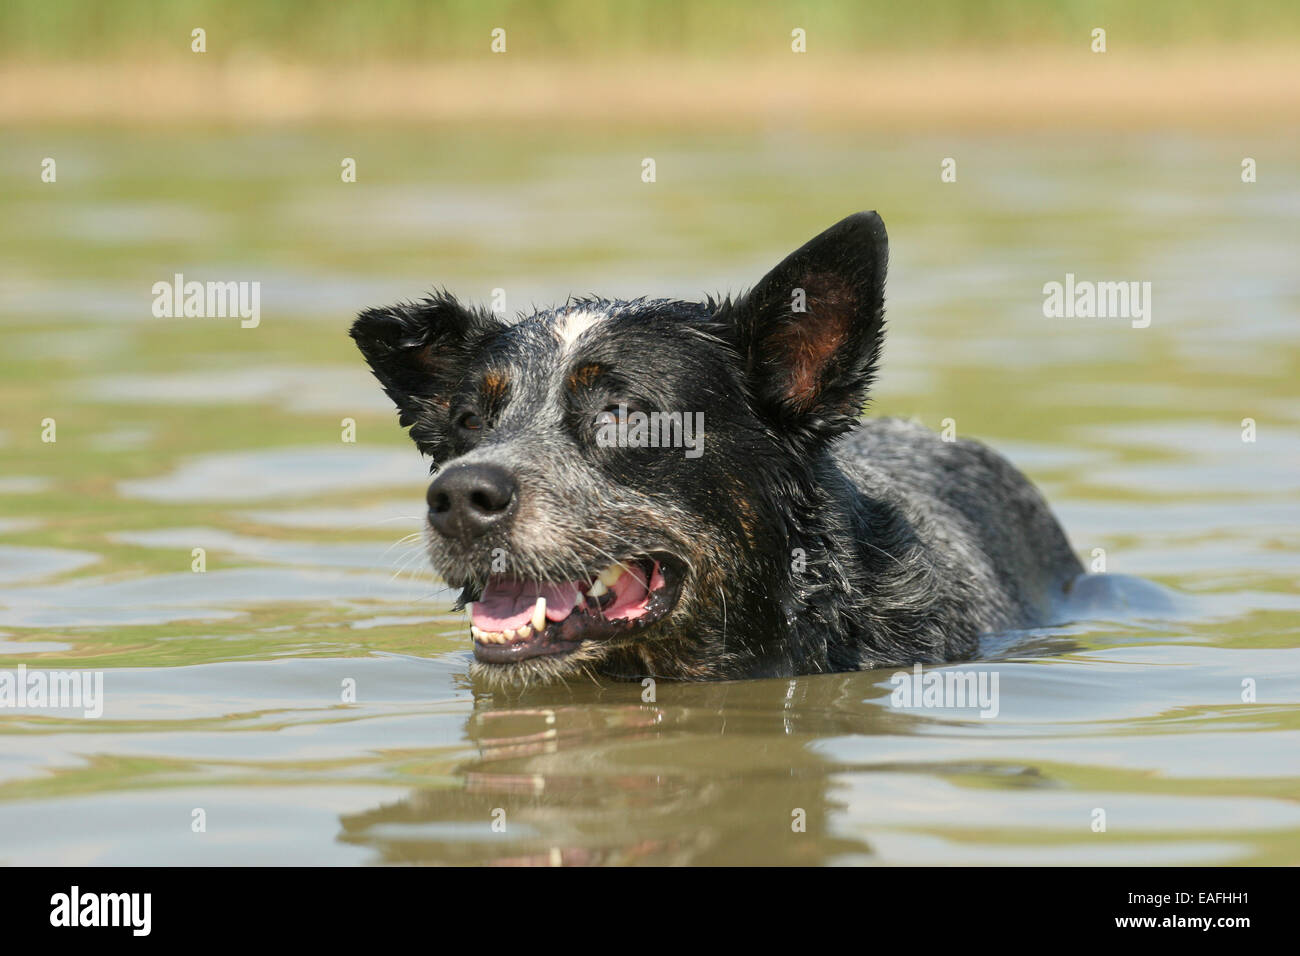 Australian Cattle Dog swimming through water Stock Photo